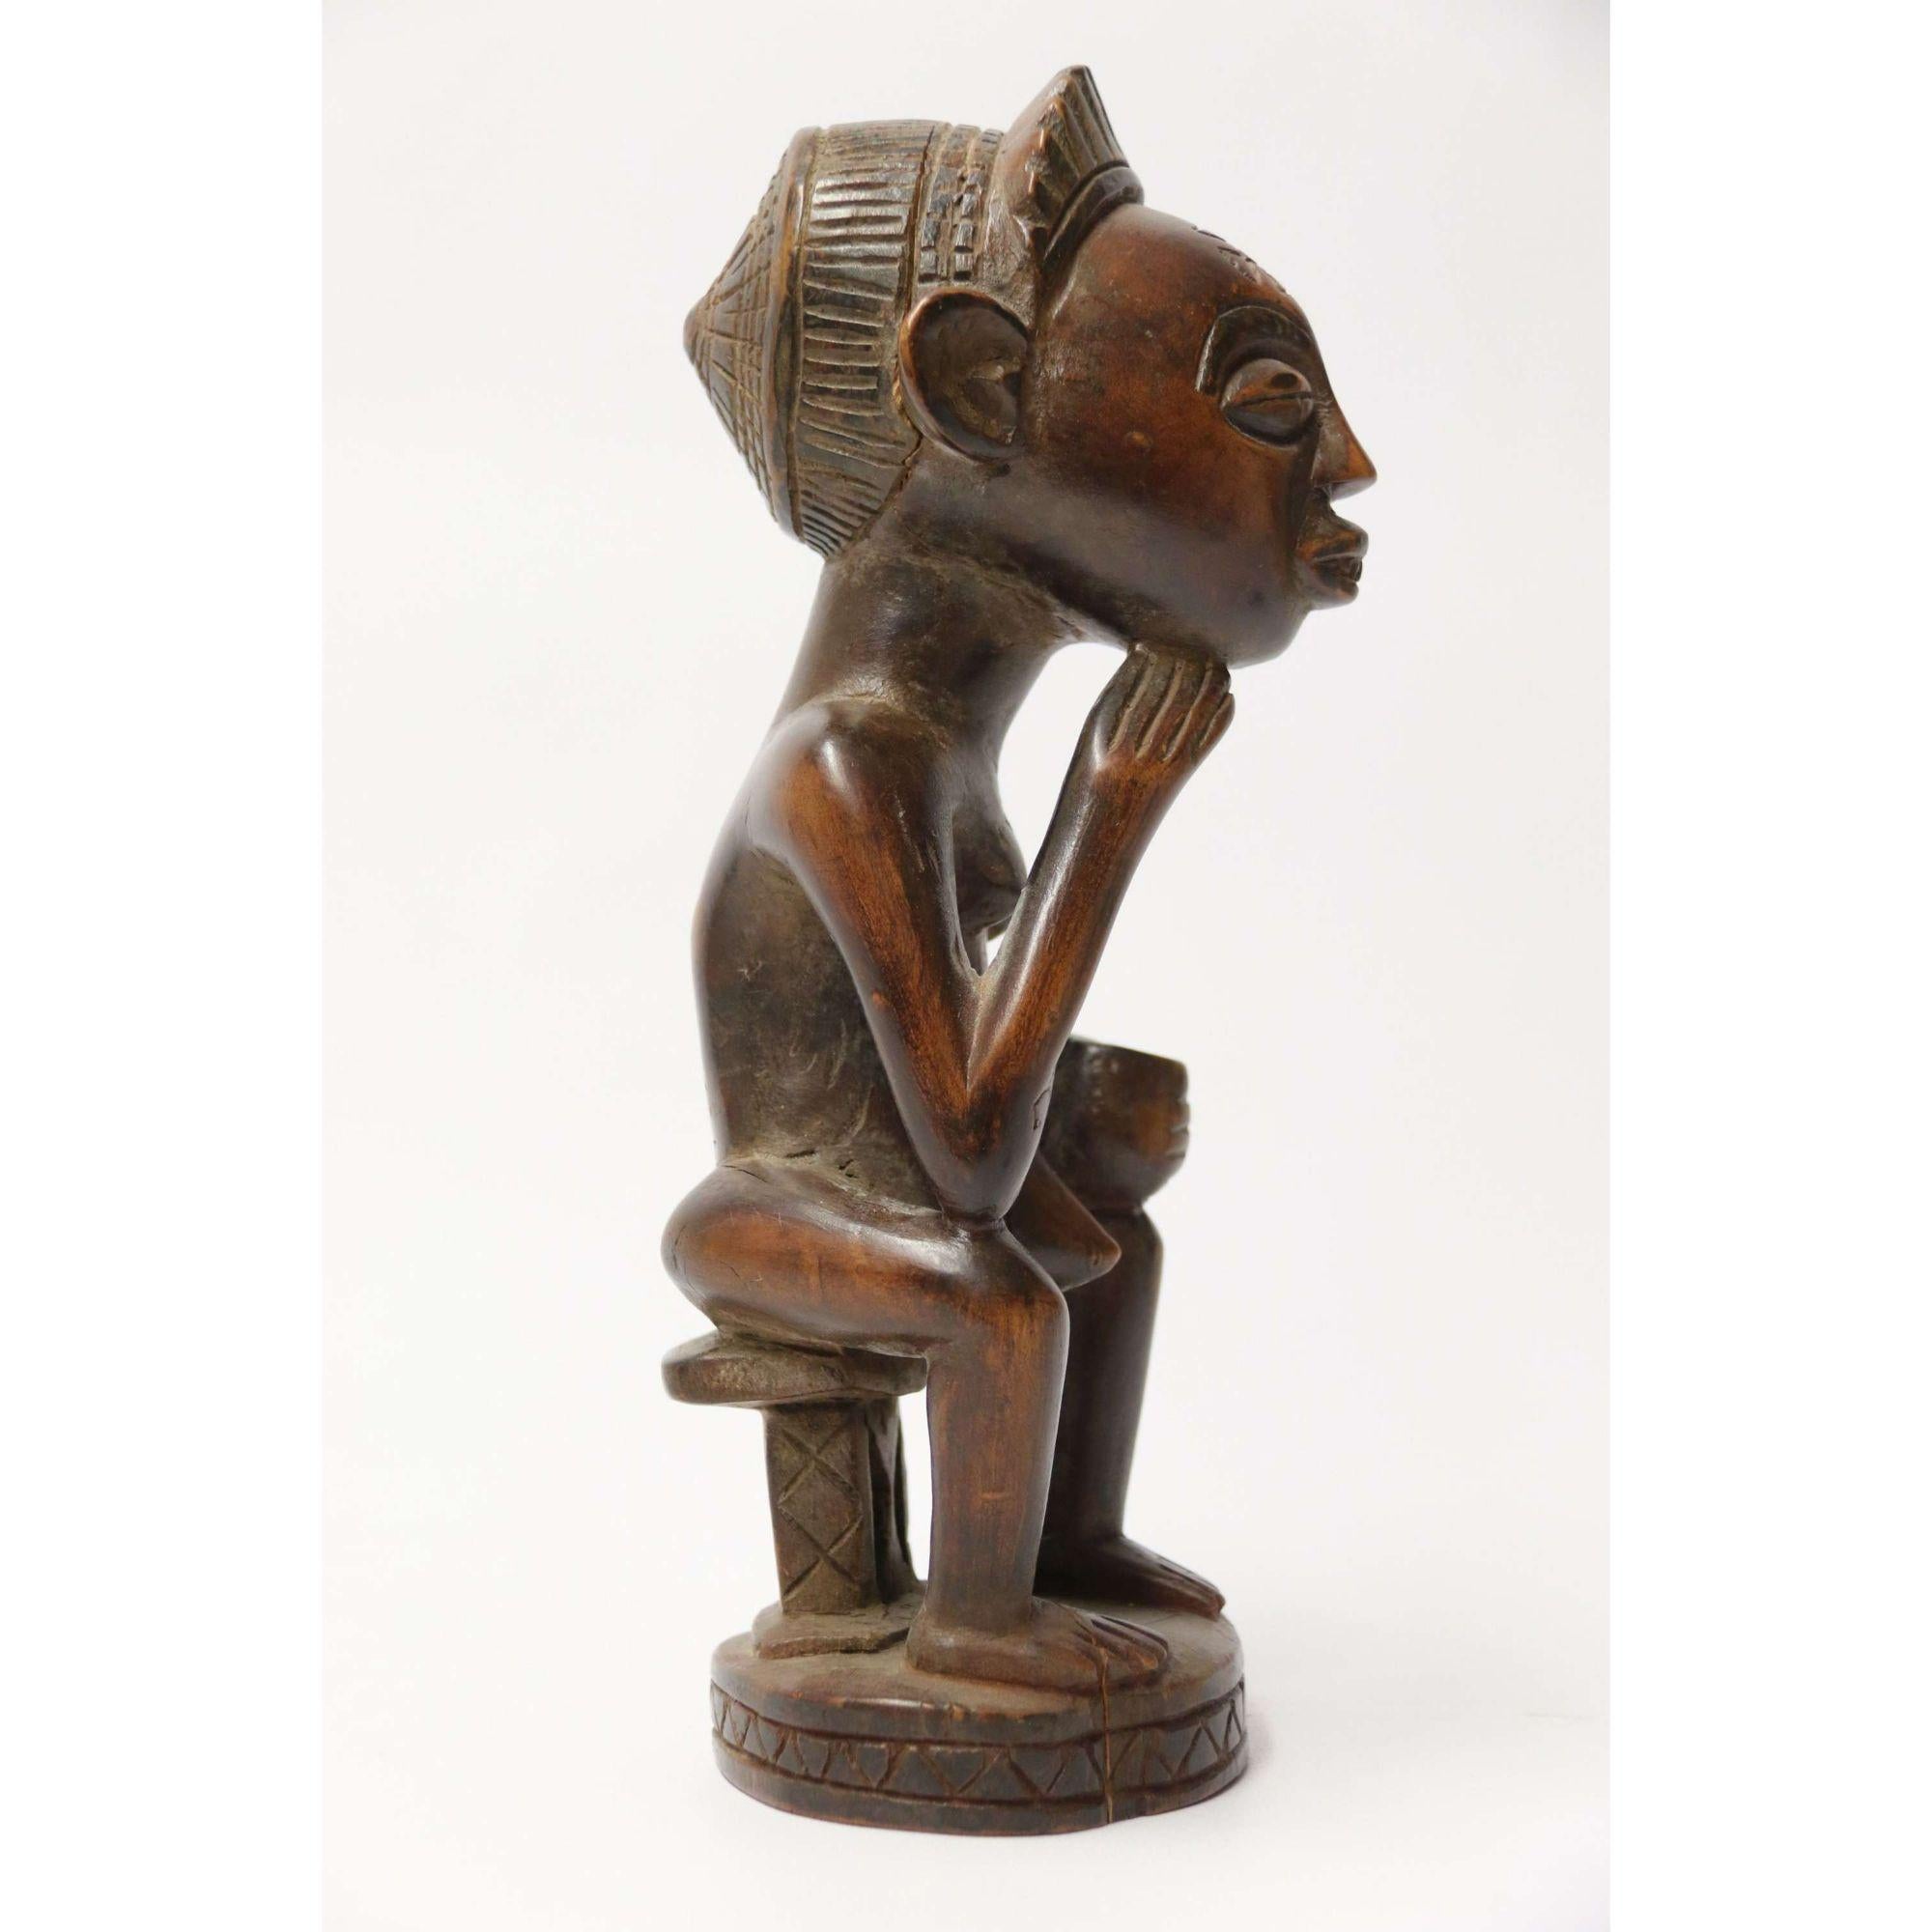 Primitive Angola Tribal Carved Hardwood Figure, circa 1930 For Sale 3